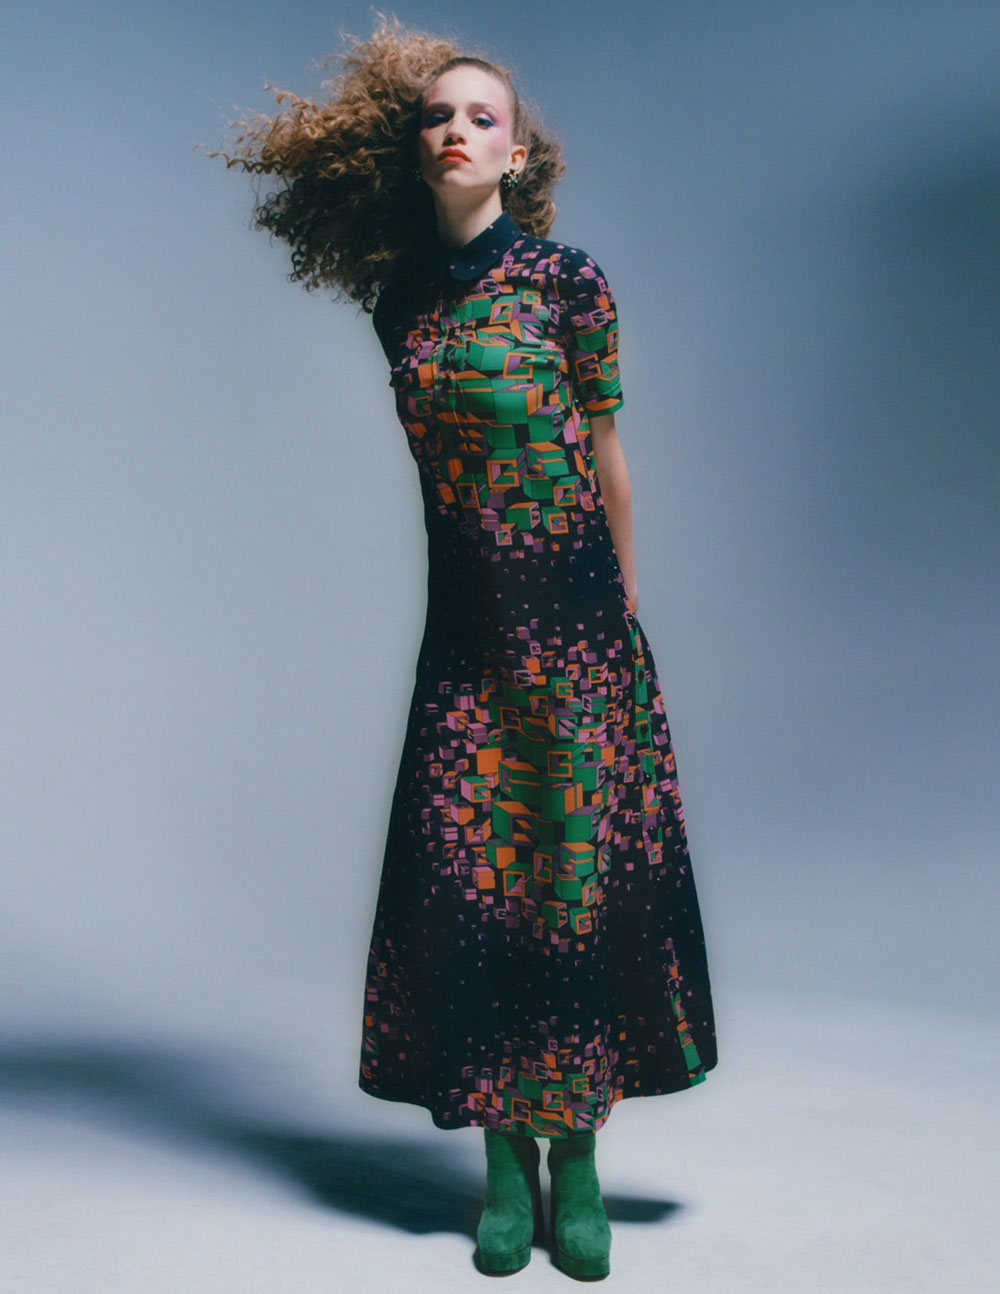 Rebecca Leigh Longendyke by Sam Rock for Vogue Paris April 2020